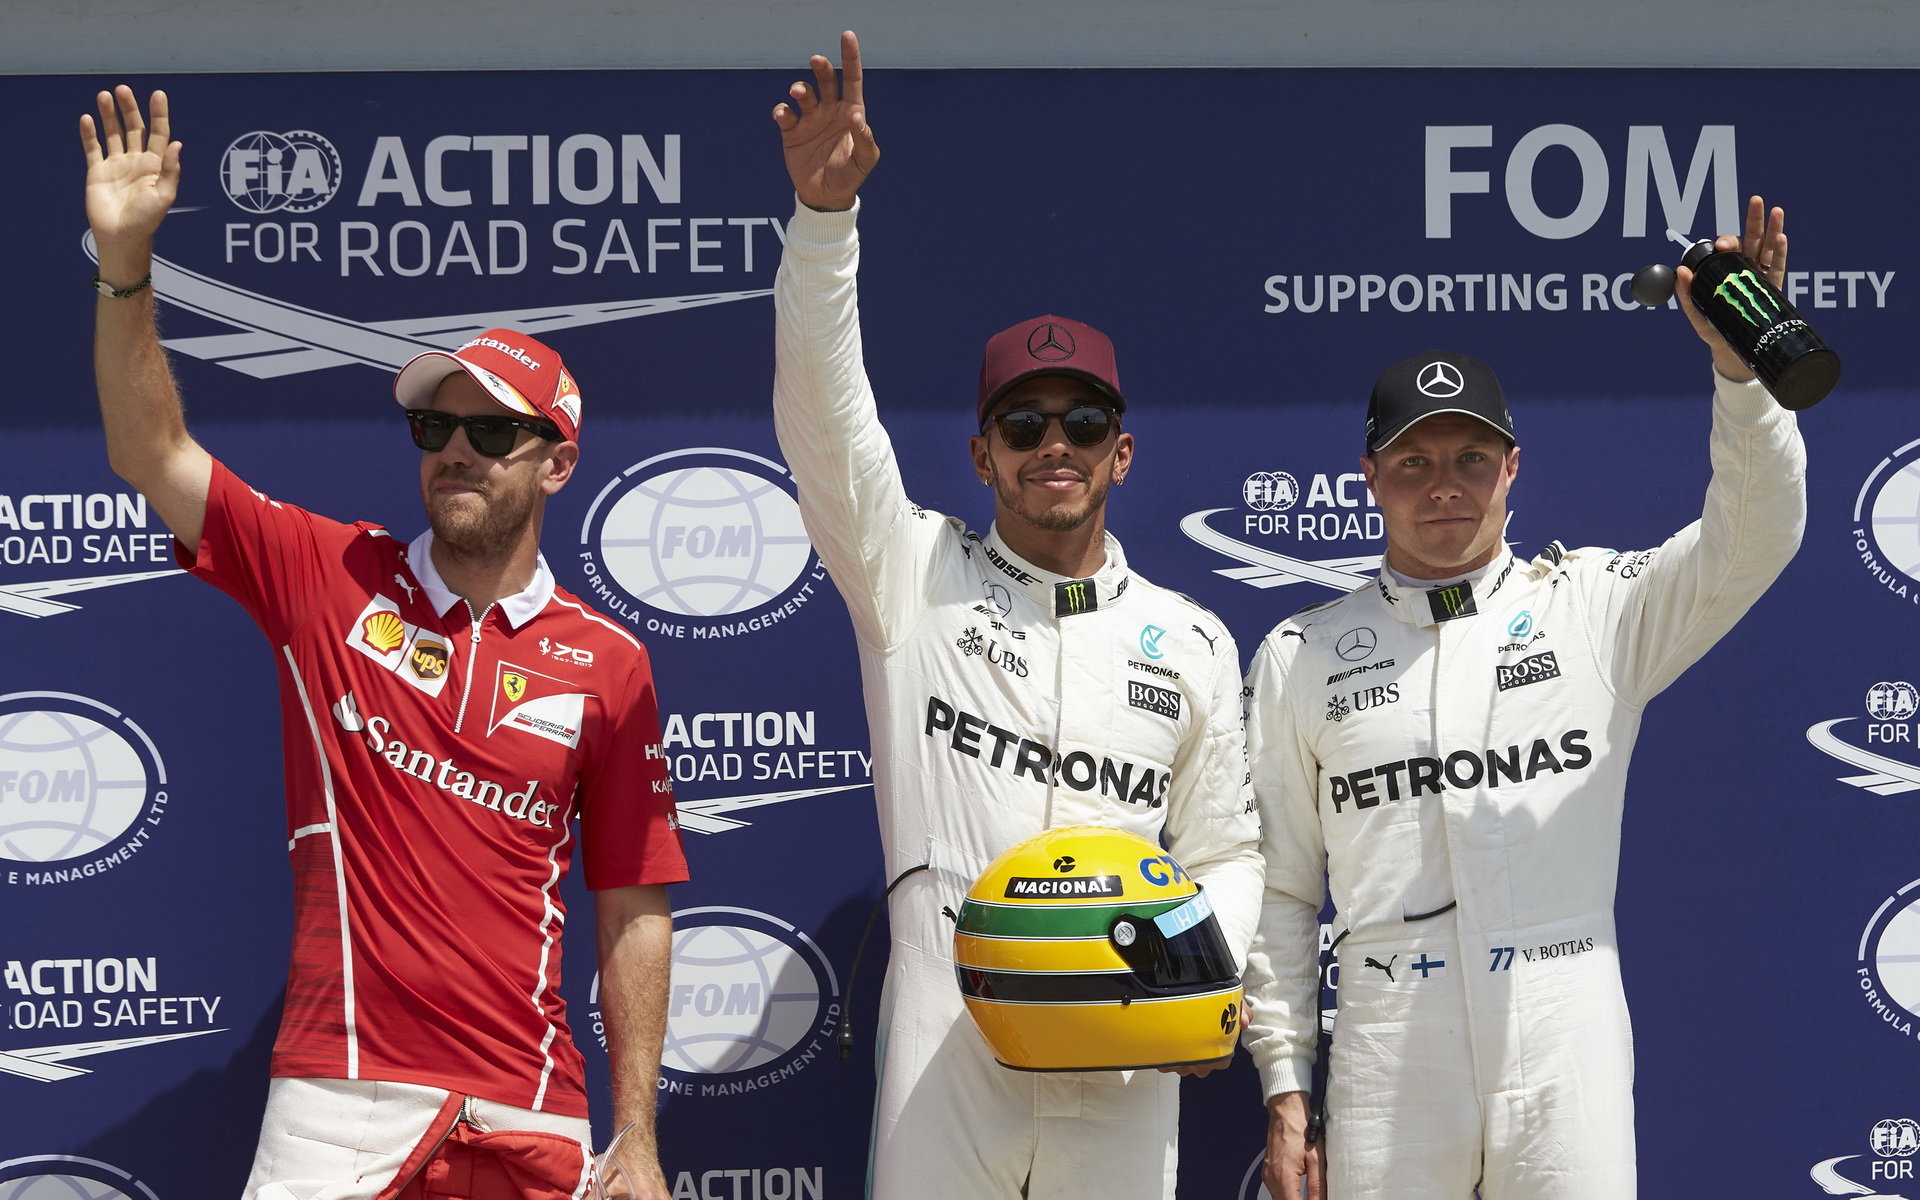 Lewis Hamilton dorovnal Ayrtona Sennu v počtu pole position v Kanadě